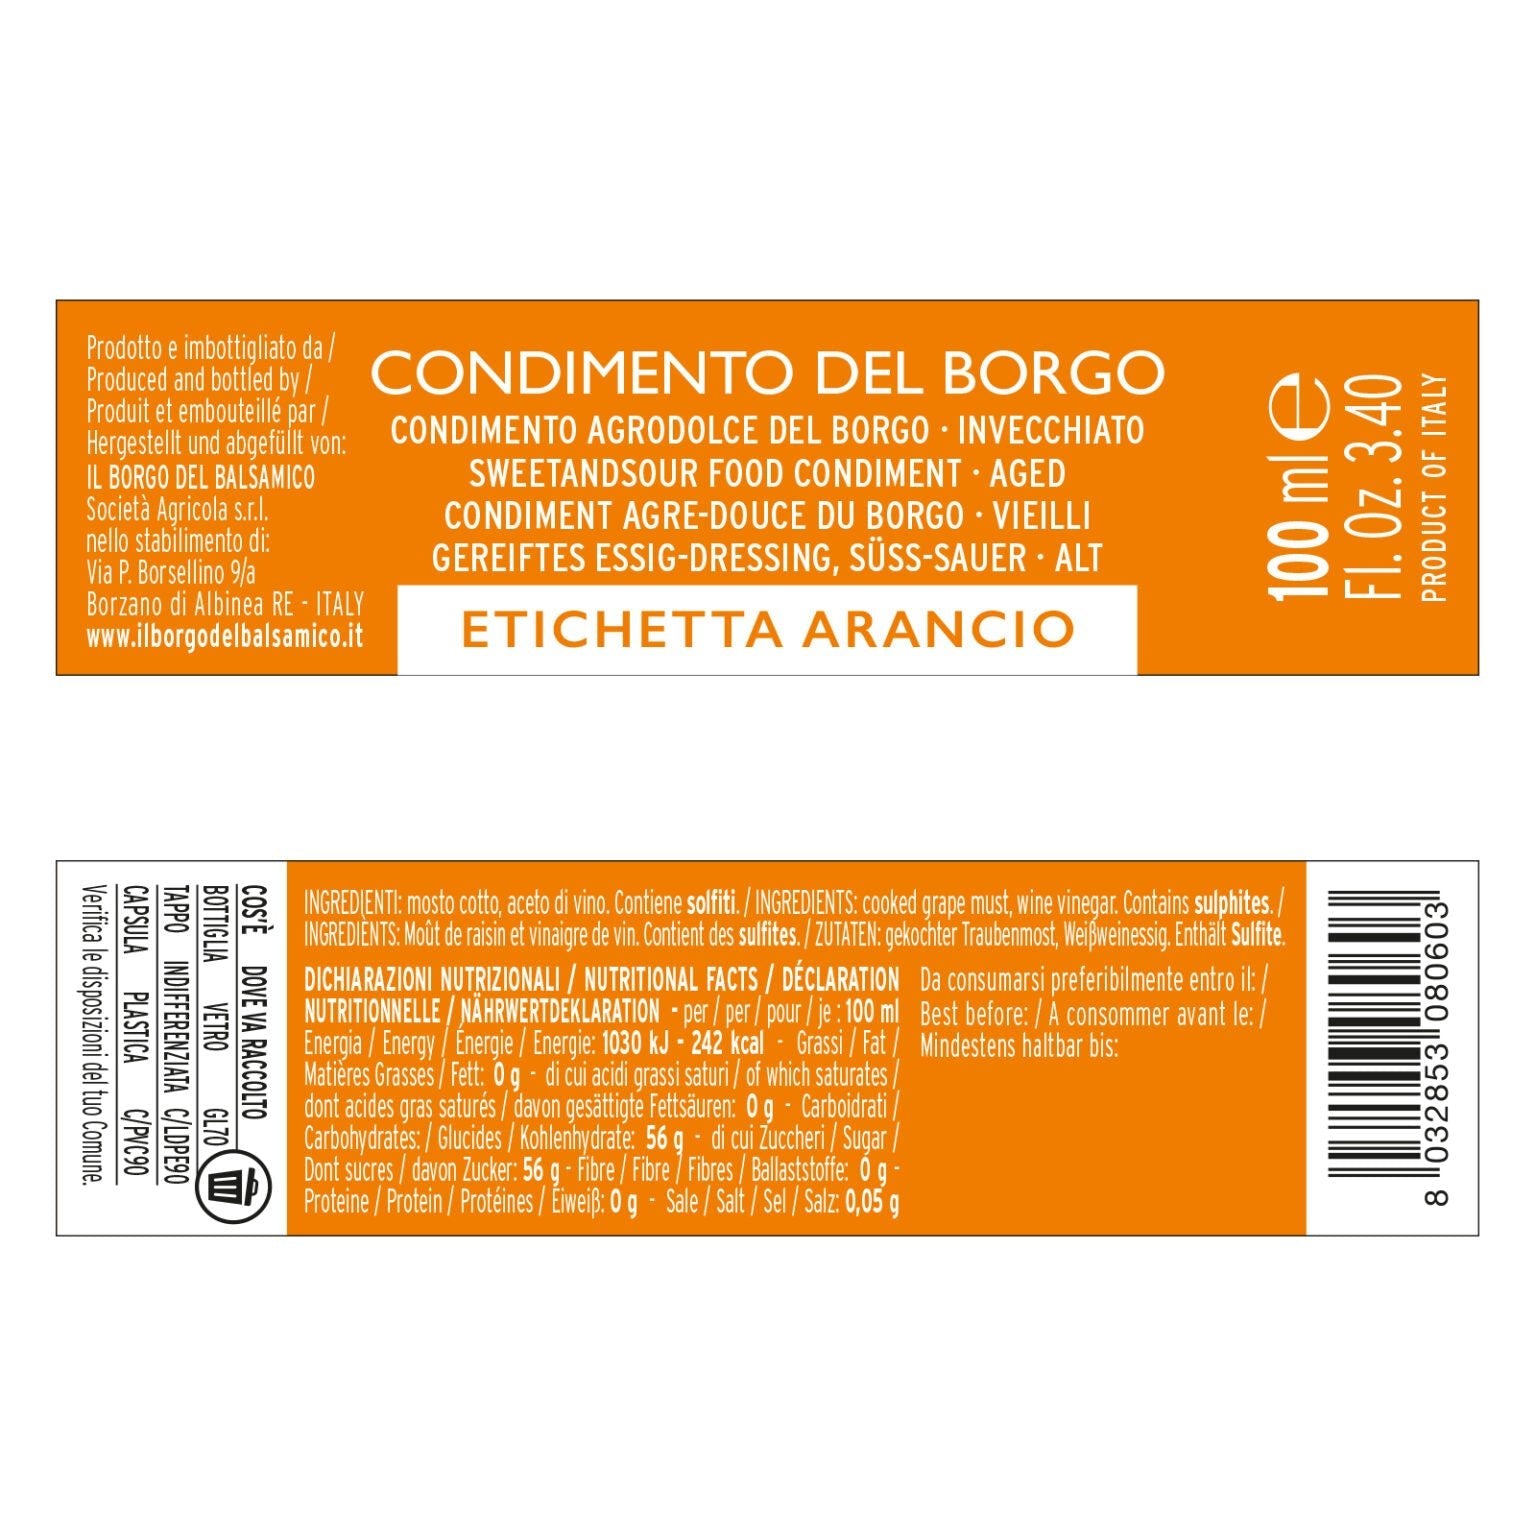 Il Borgo del Balsamico Aged Balsamic Condiment Orange Label Medium Acidity 100ml Feast Italy